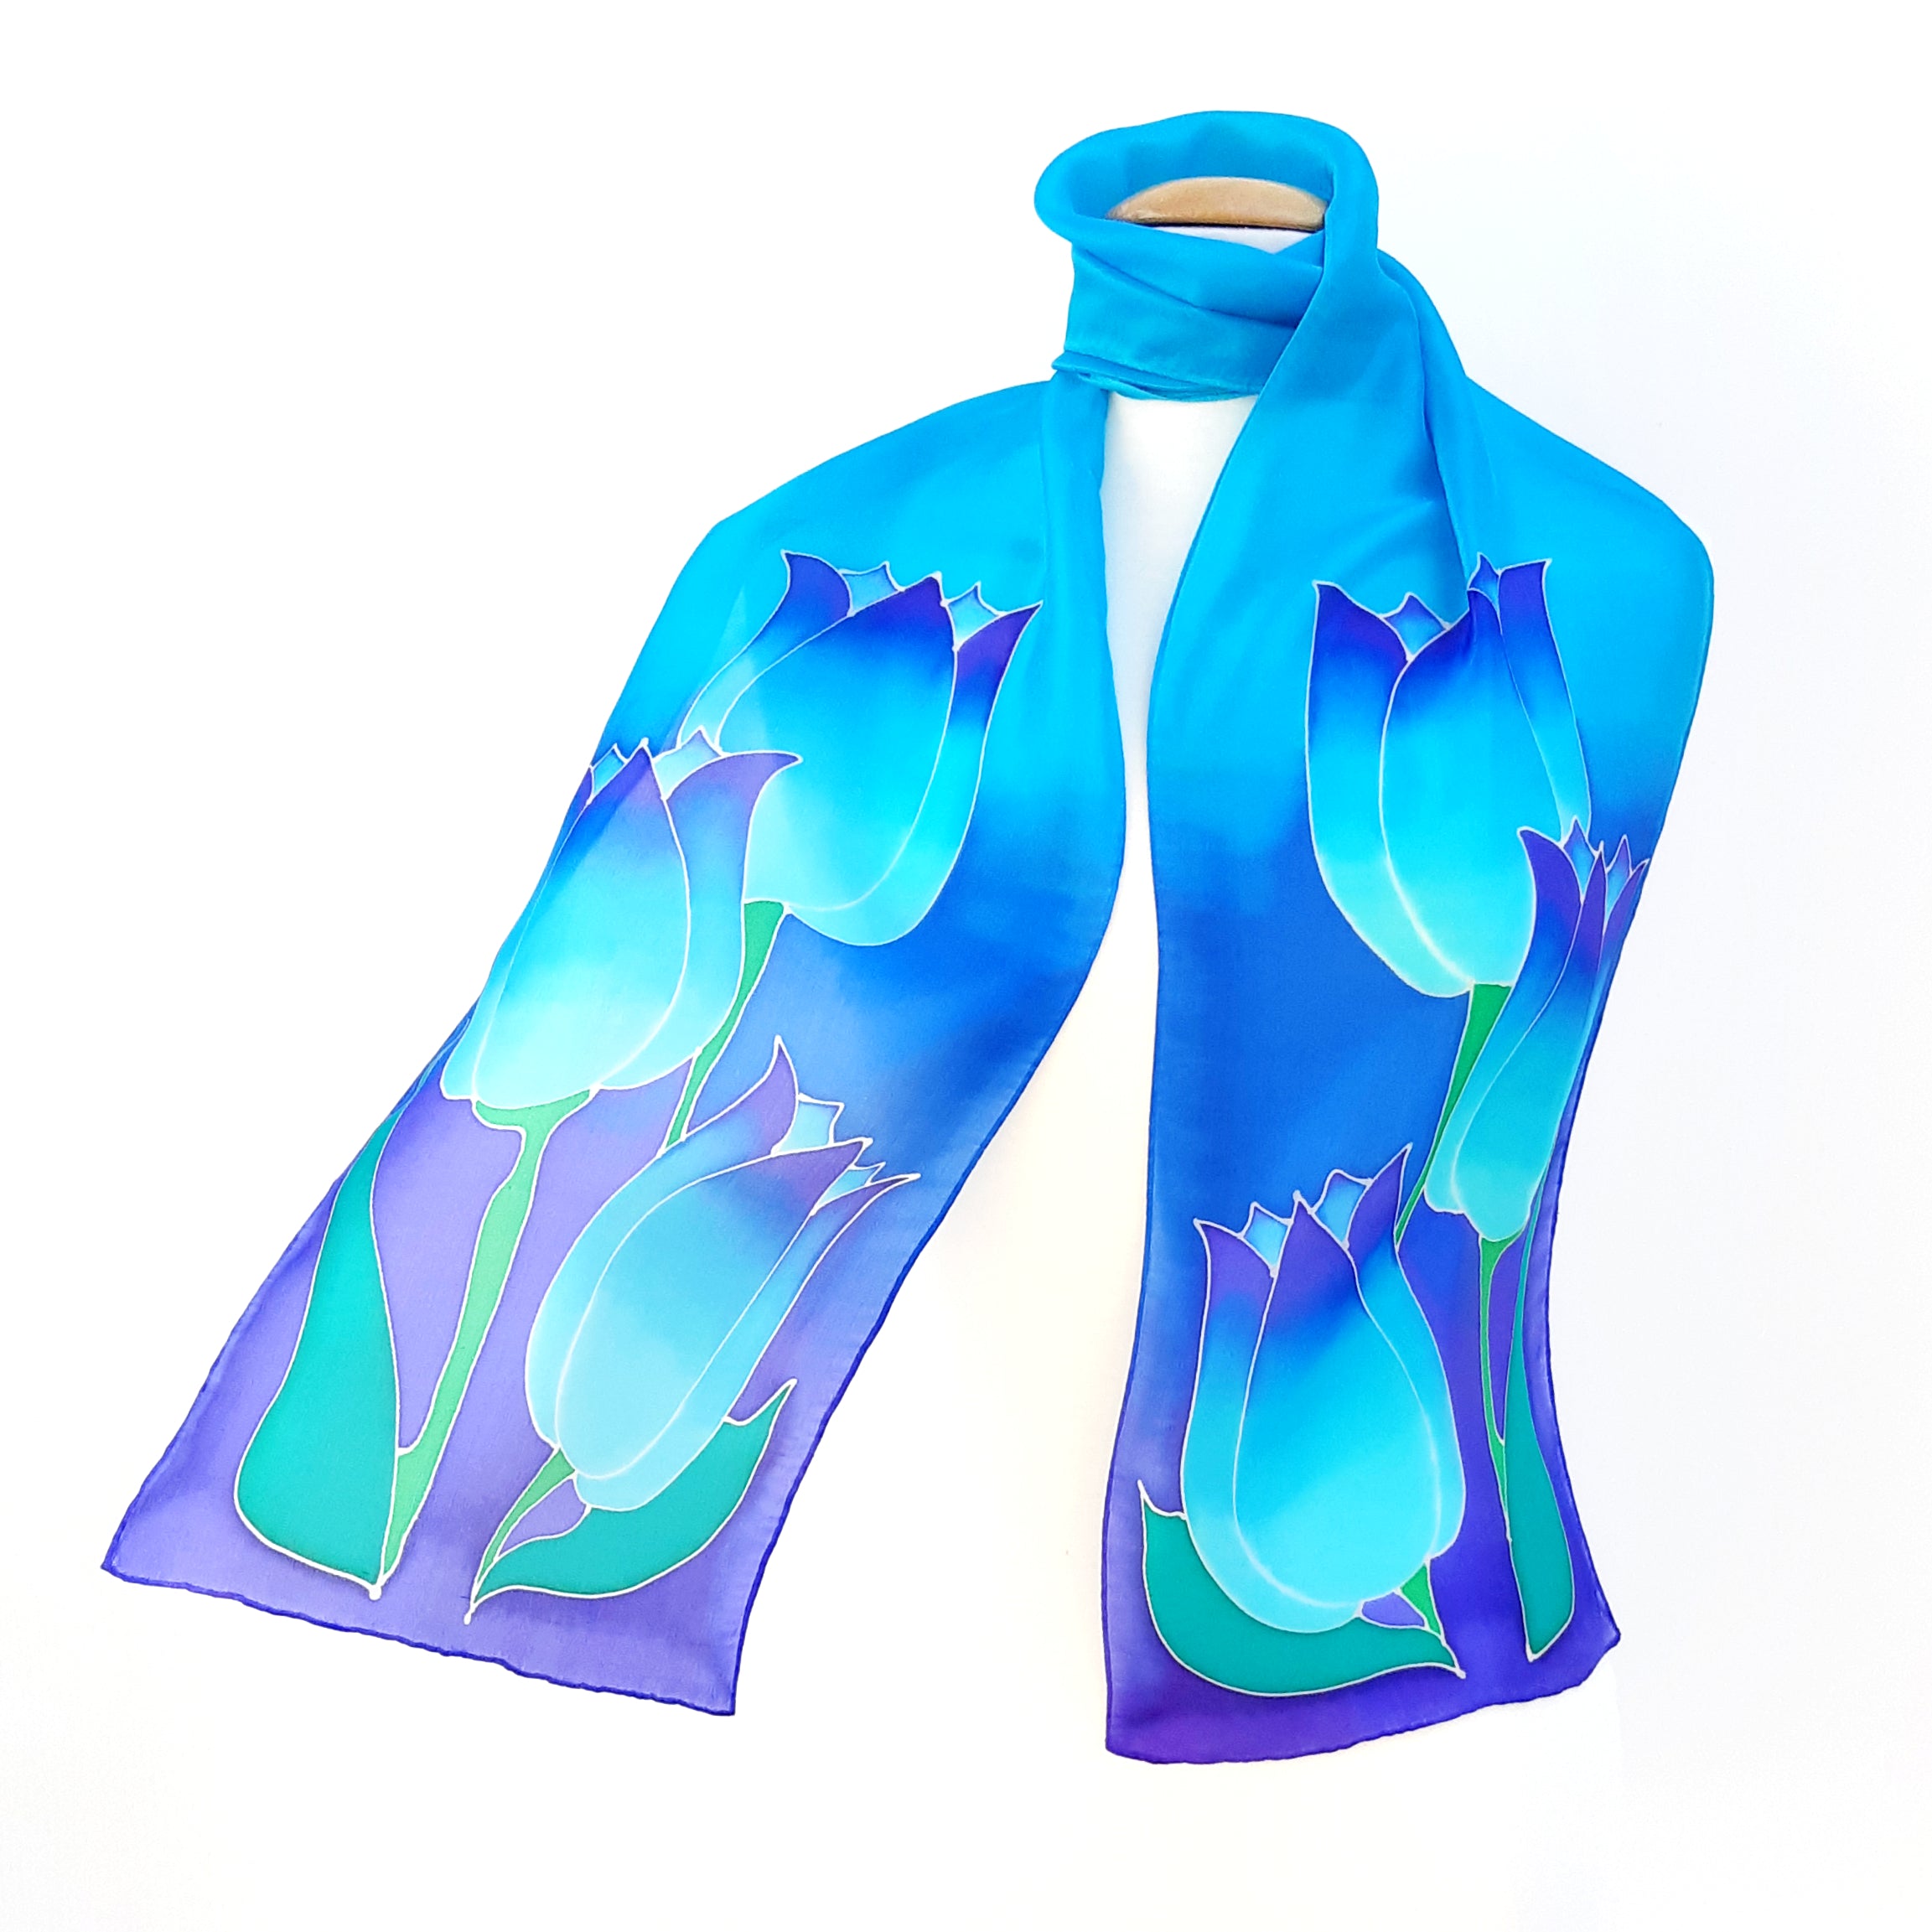 Tulip scarf hand painted silk women's clothing accessory handmade by Lynne Kiel